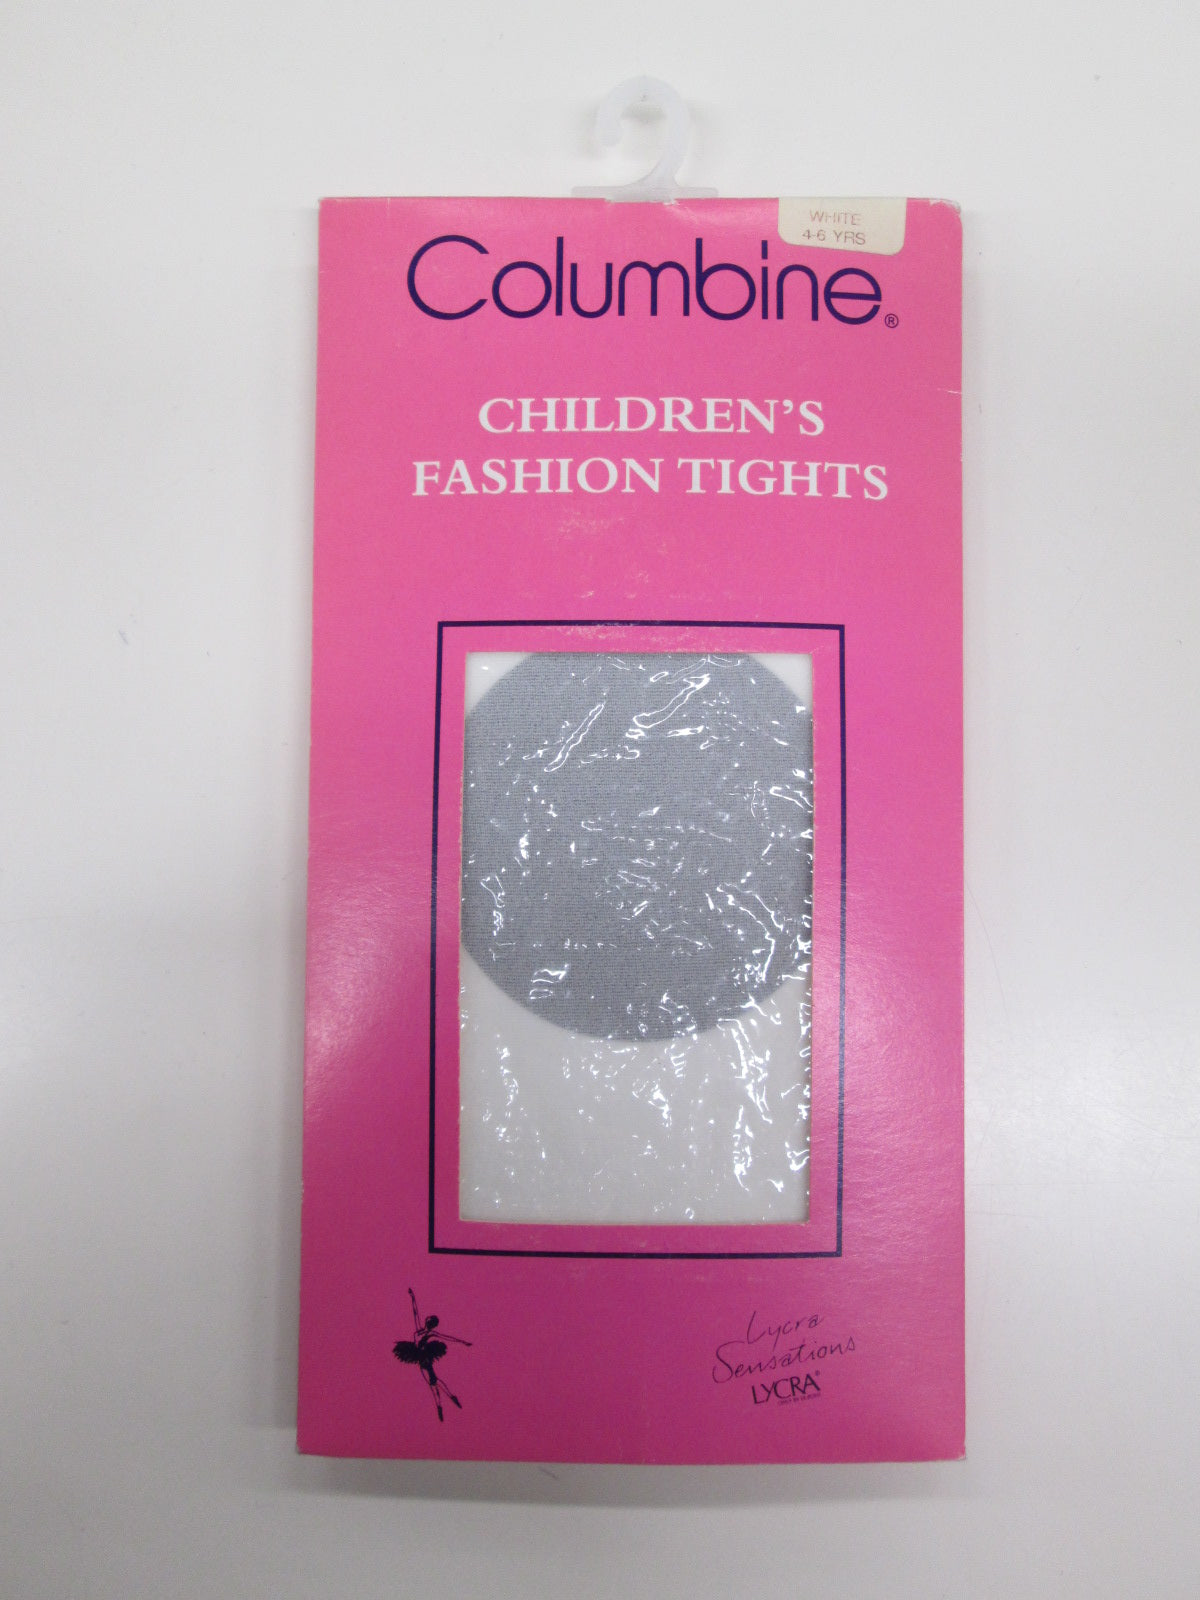 Columbine Children's Fashion Tights